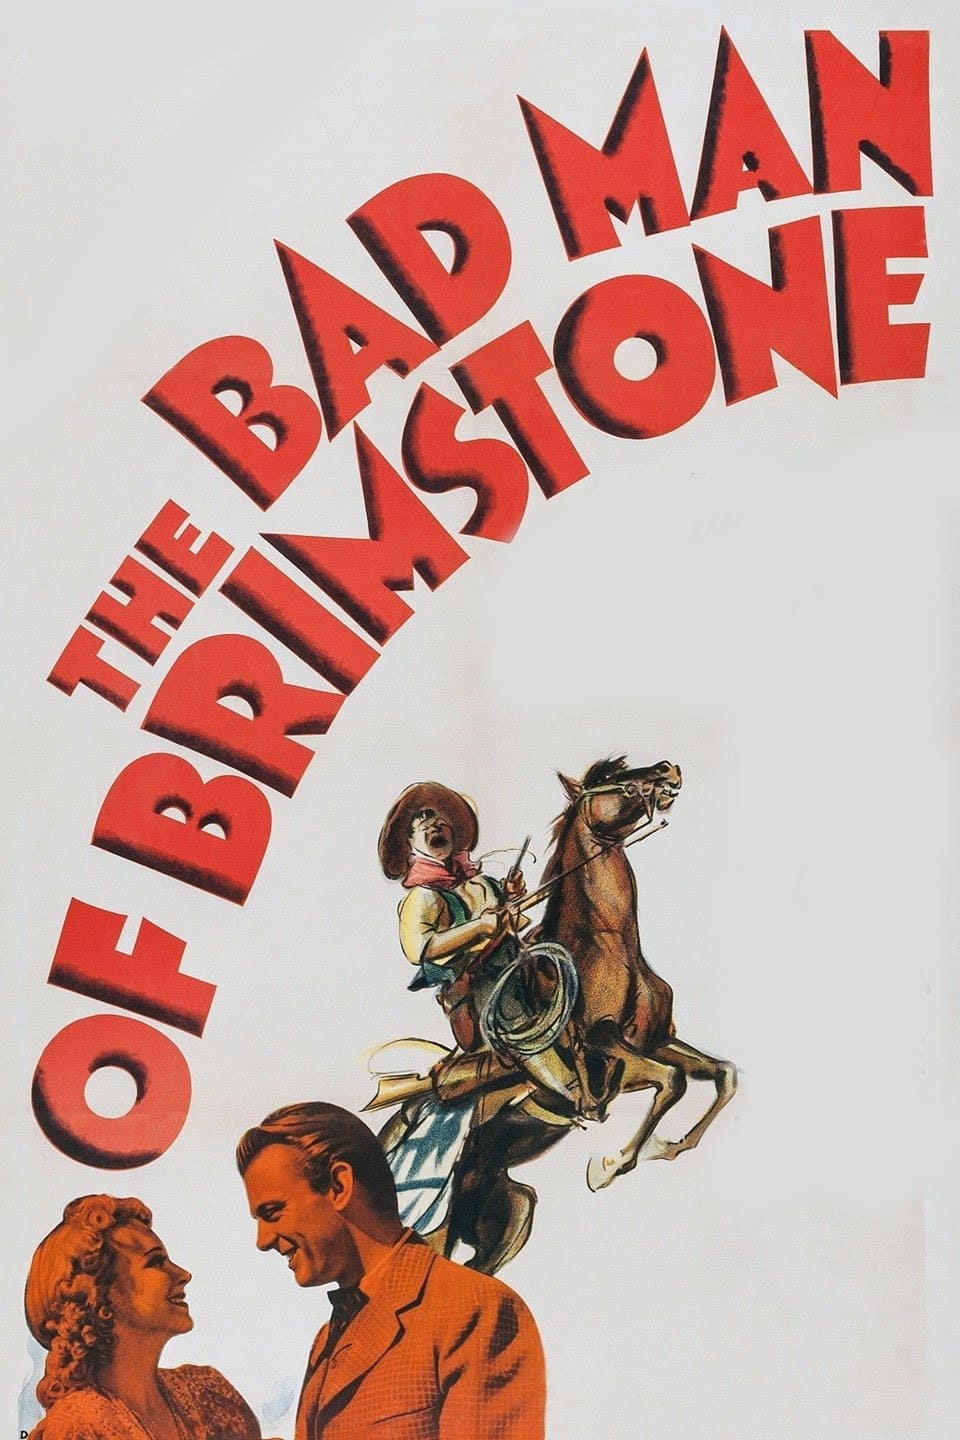 The Bad Man of Brimstone (1937)